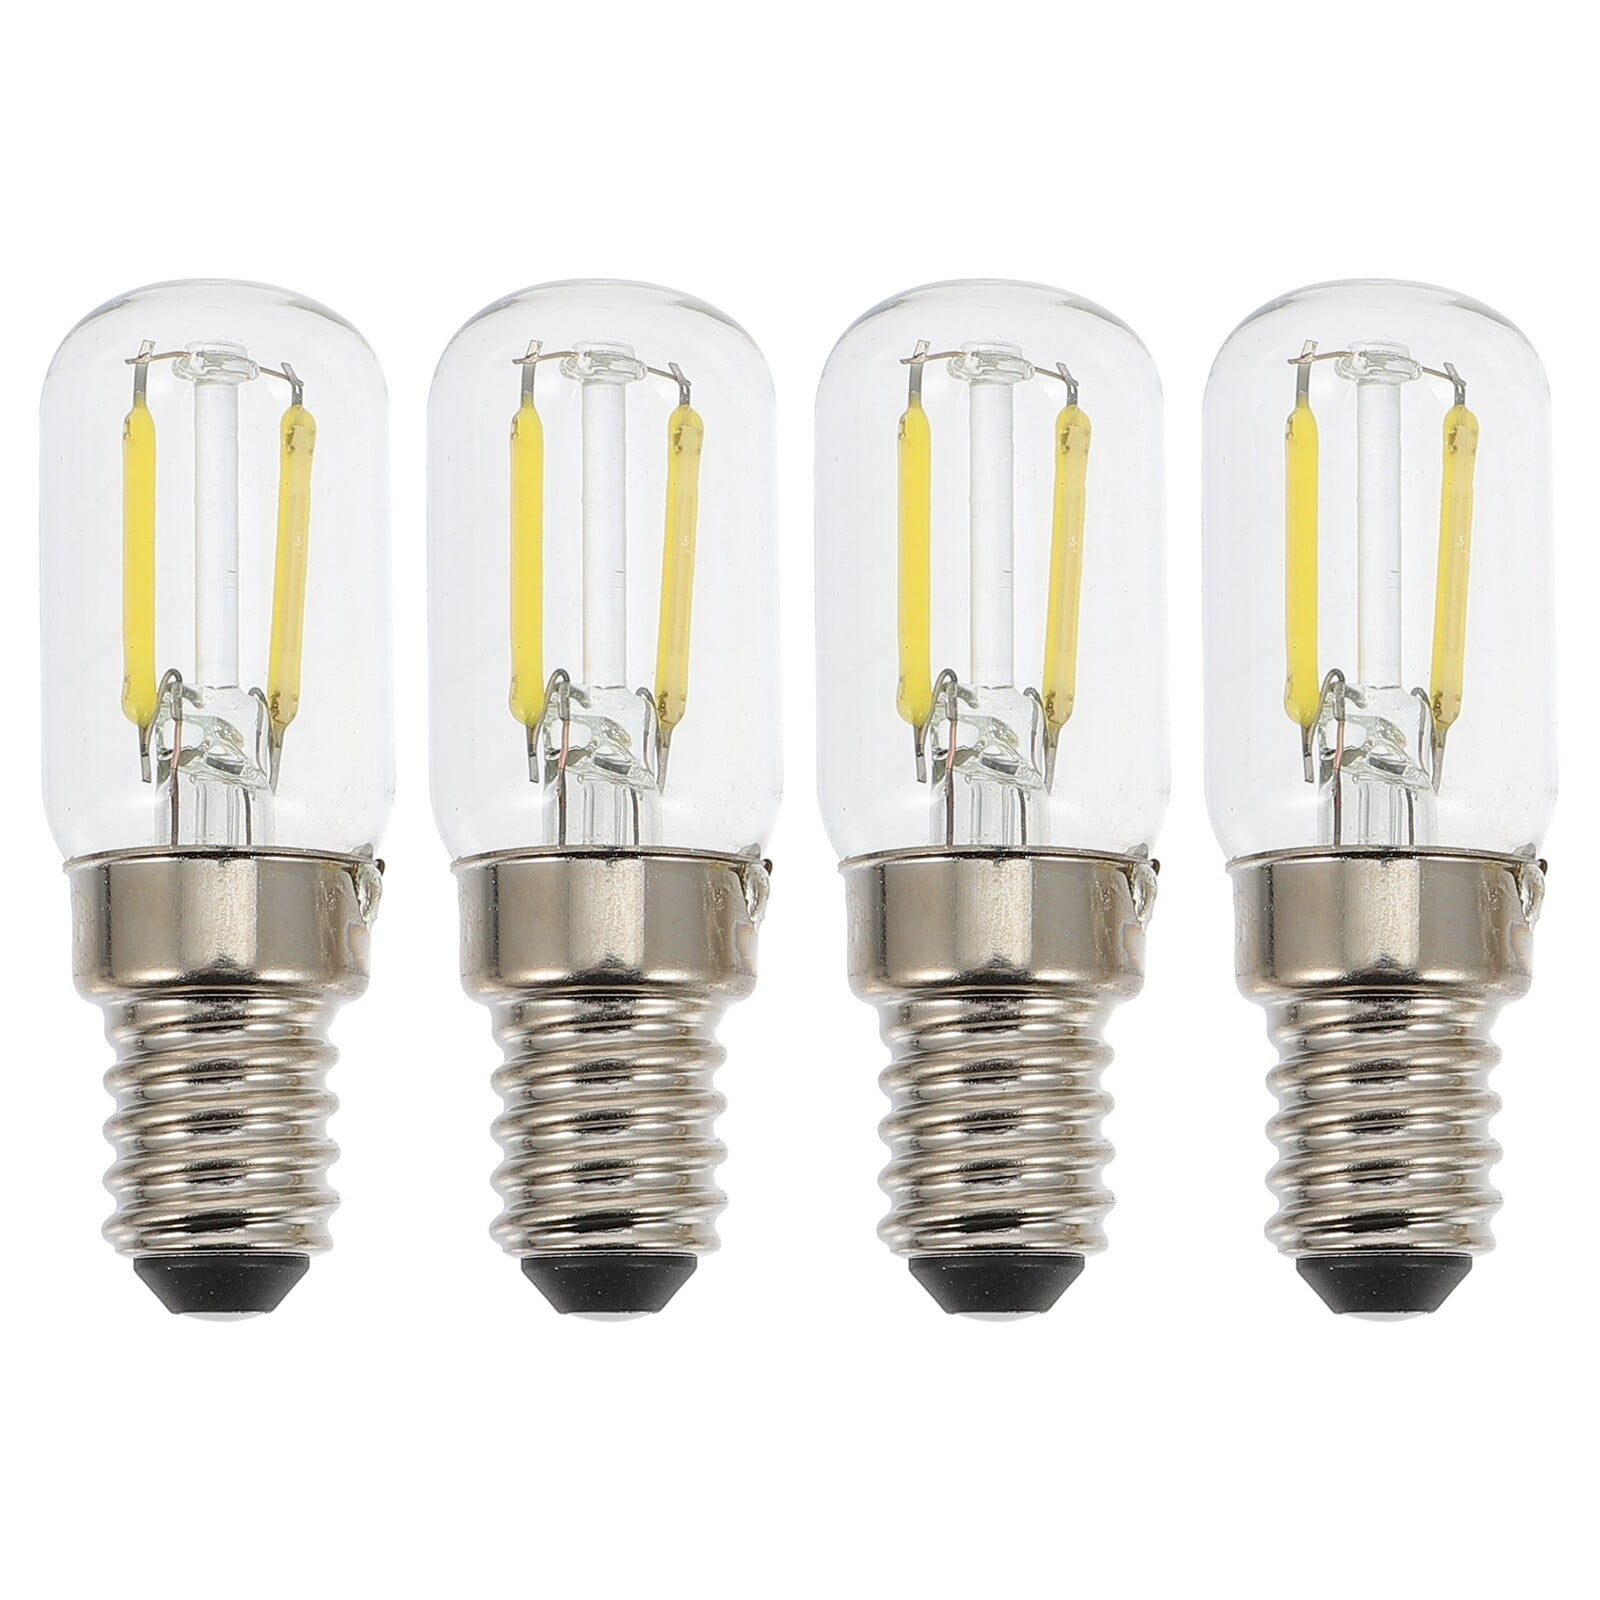 LED Fridge Light Bulbs: Does It Work? - LampHQ